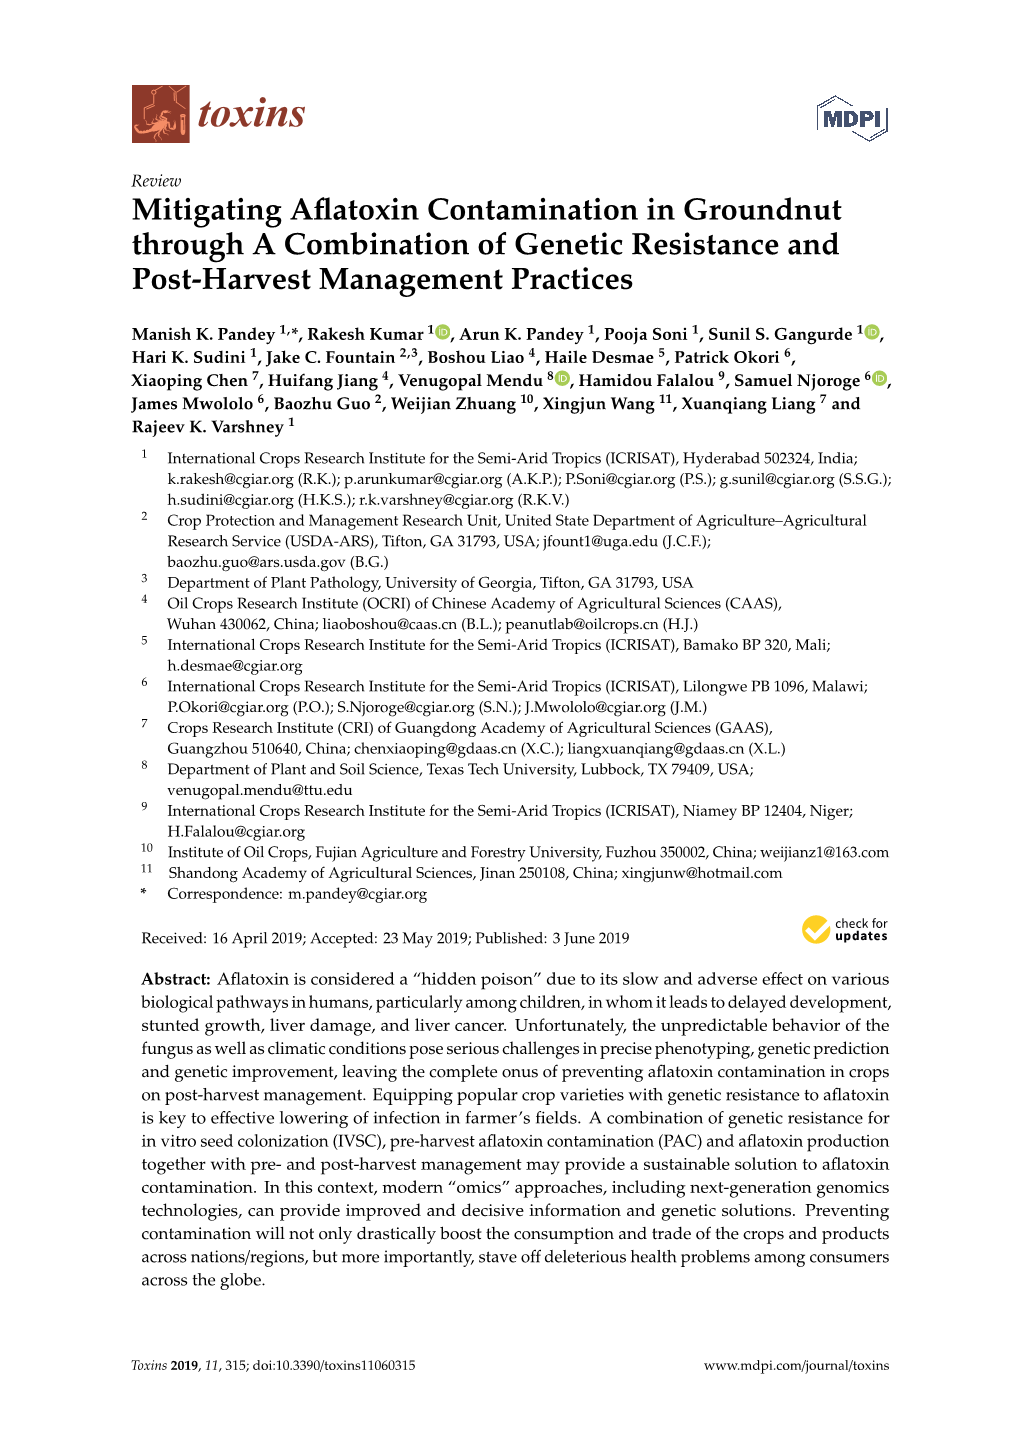 Mitigating Aflatoxin Contamination in Groundnut Through a Combination